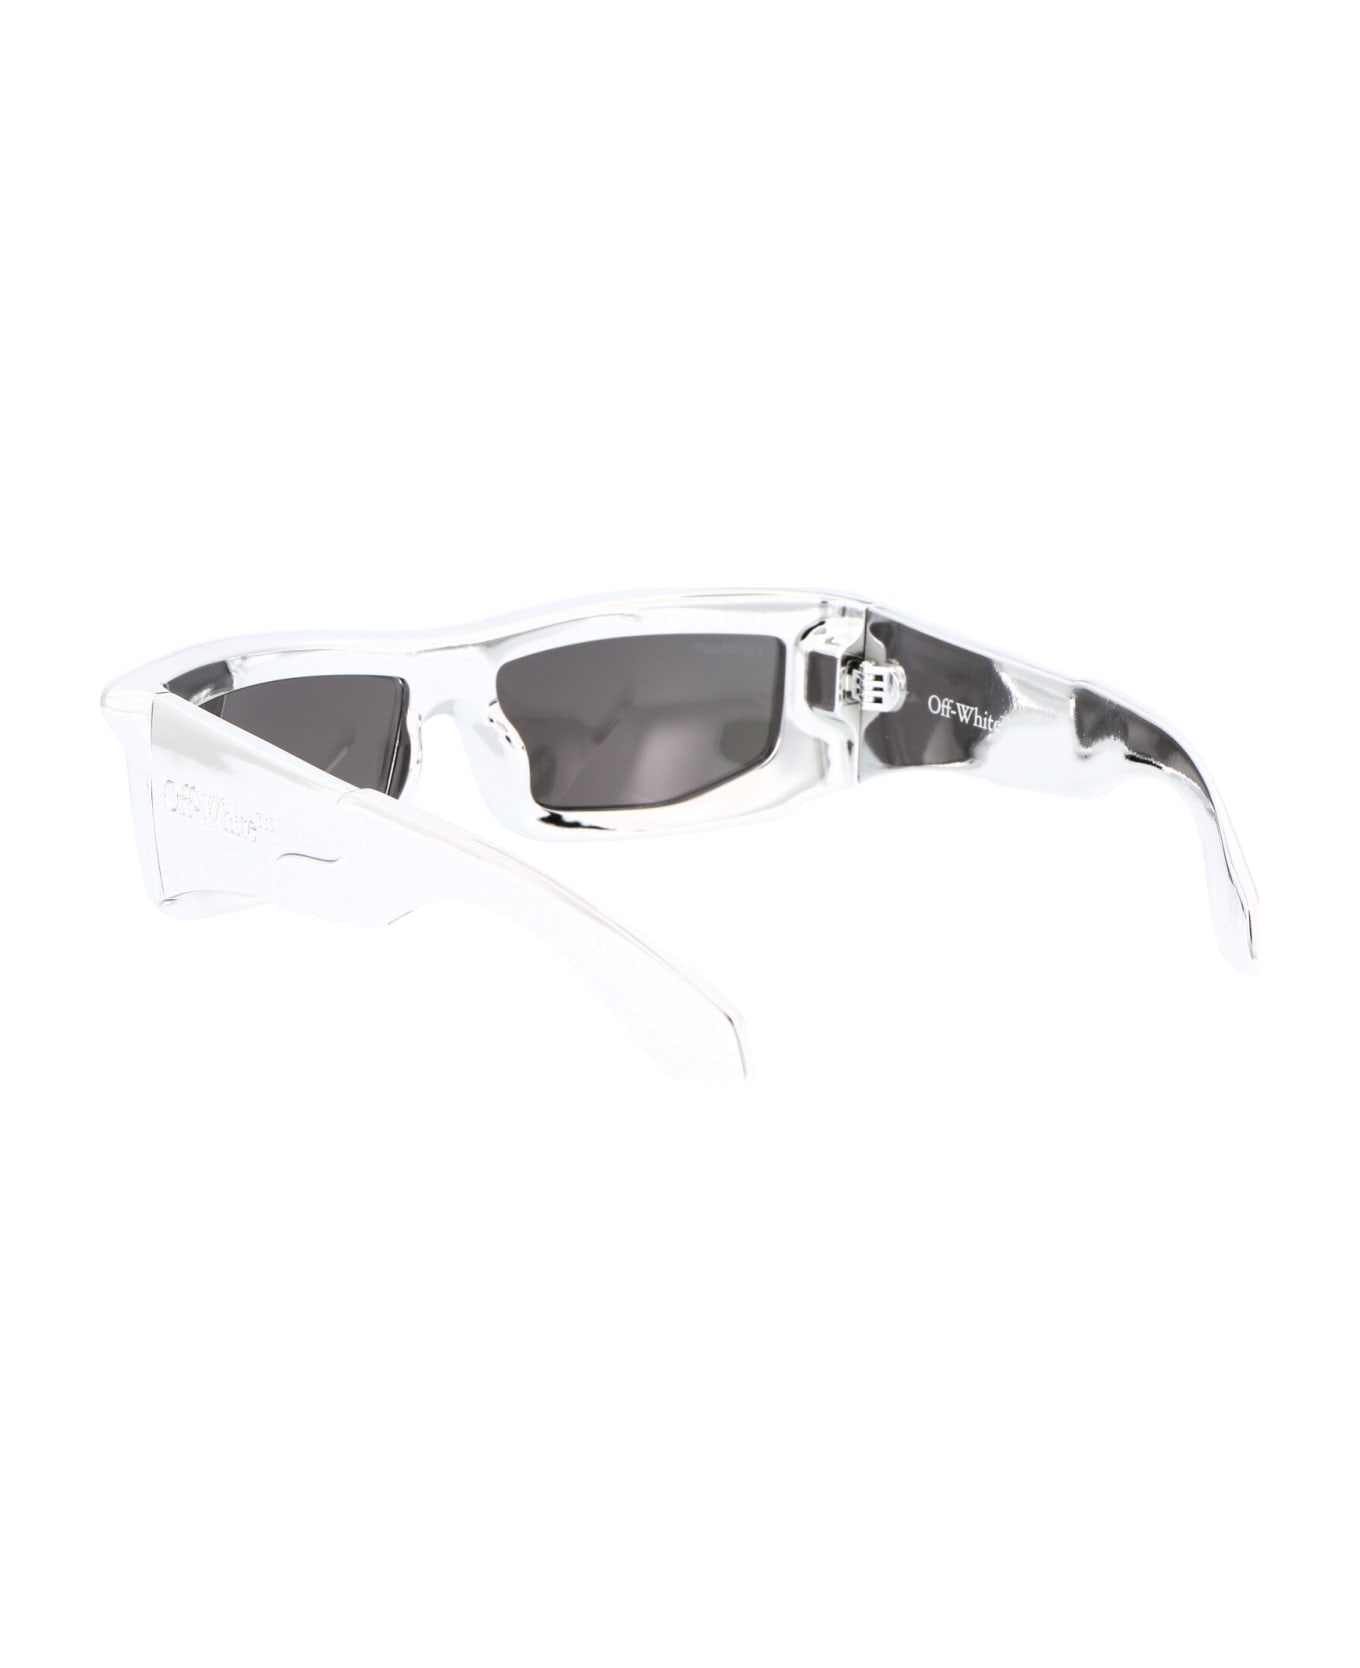 Off-White Volcanite Sunglasses - Argento